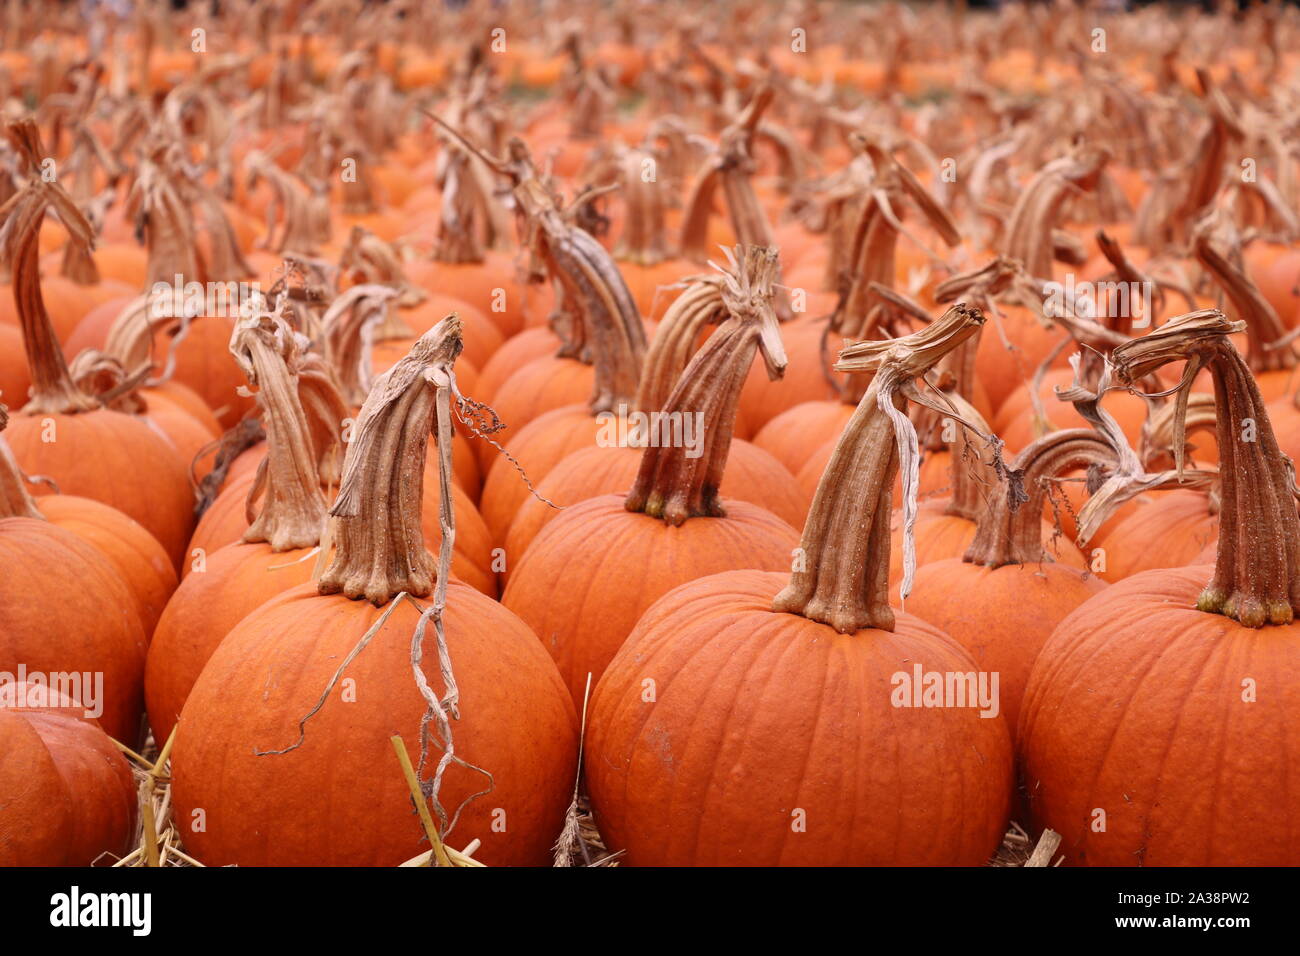 Orange pumpkins at a pumpkin patch Stock Photo